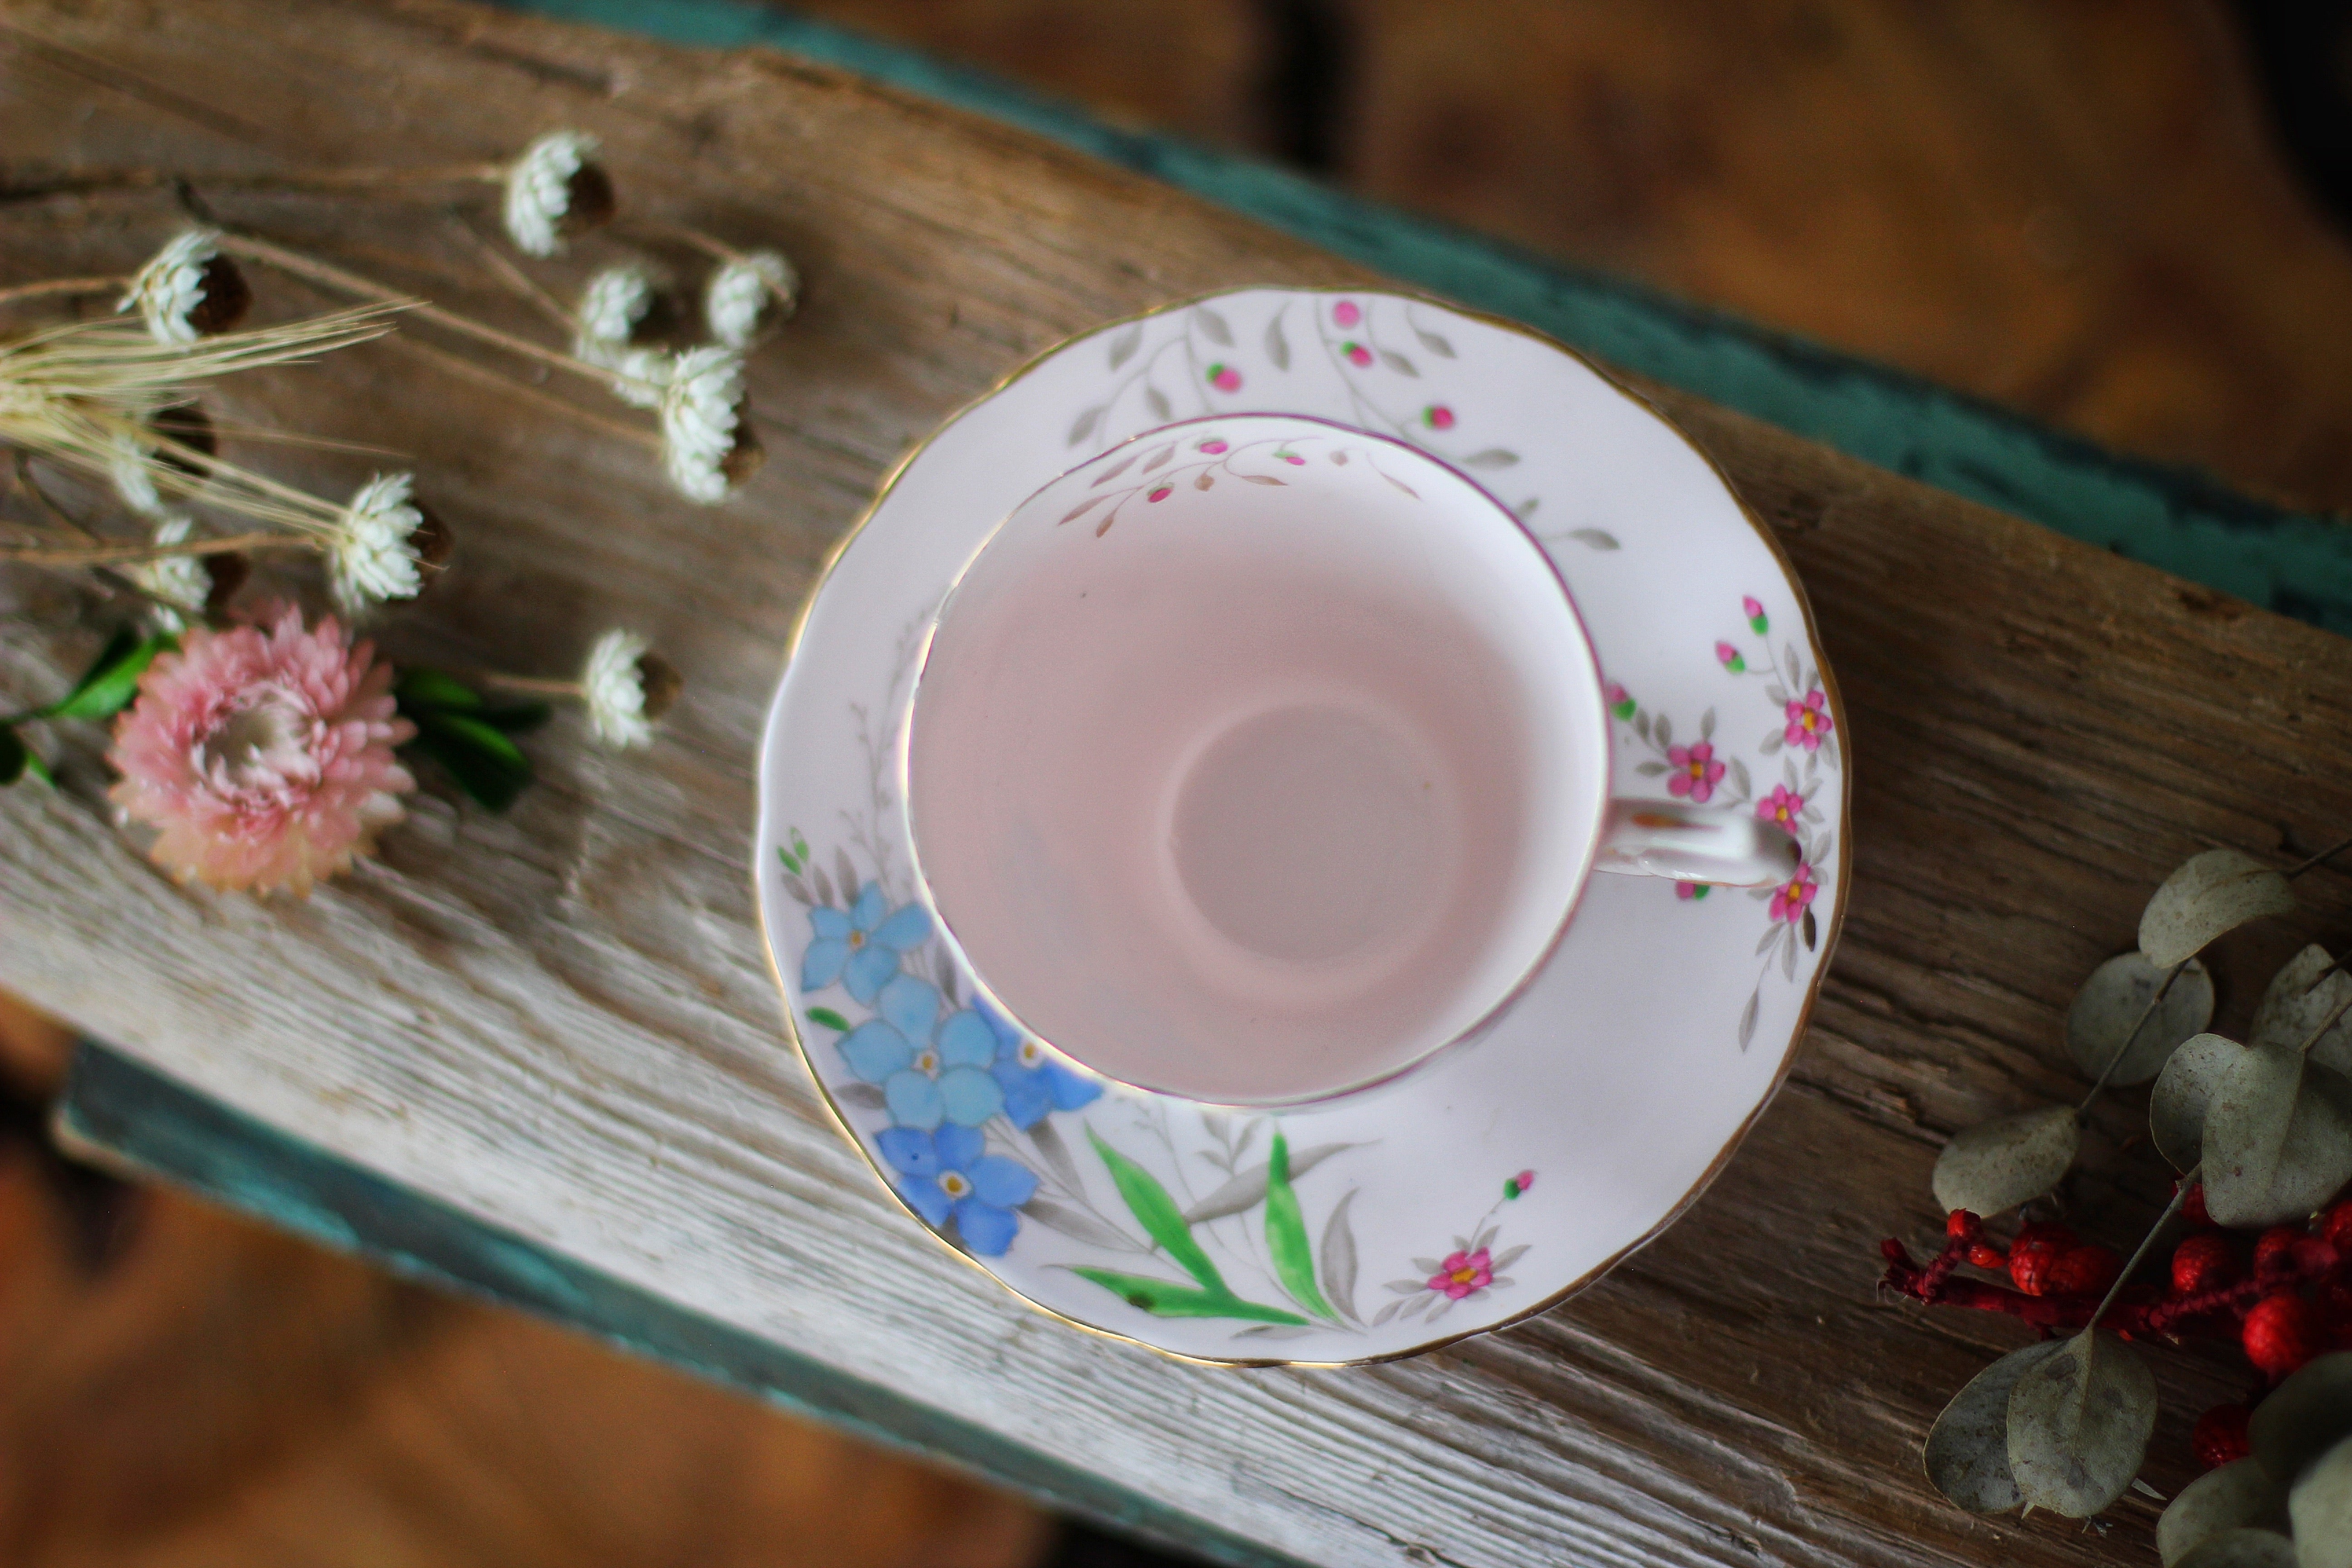 Vintage Floral Variety Rare Pink Tuscan Tea Cup Set